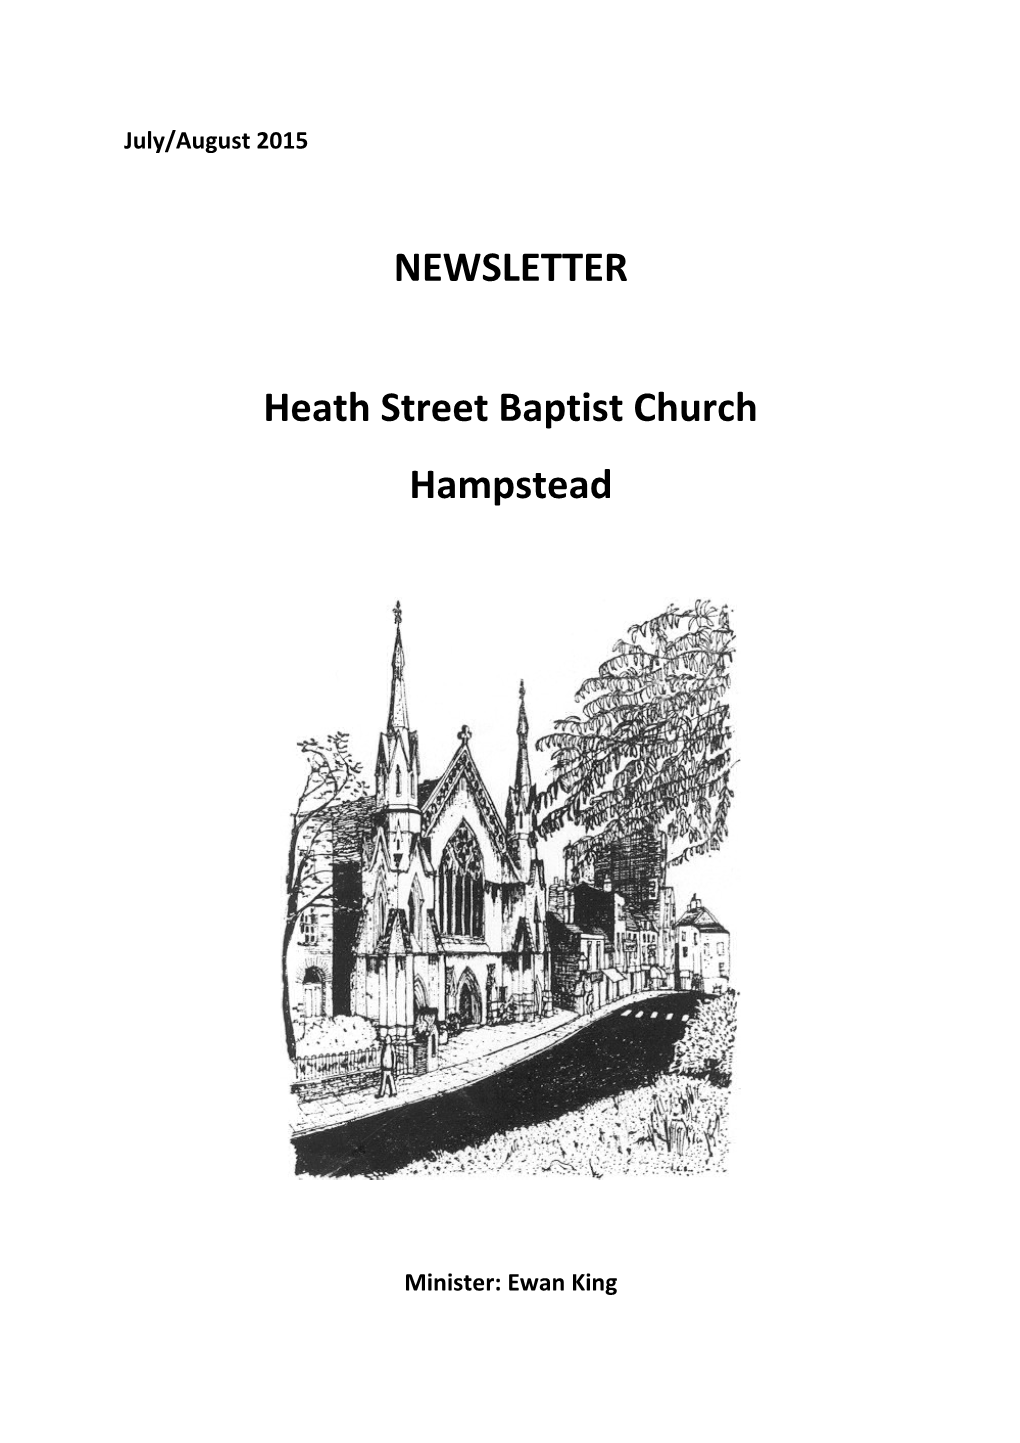 Heath Street Baptist Church